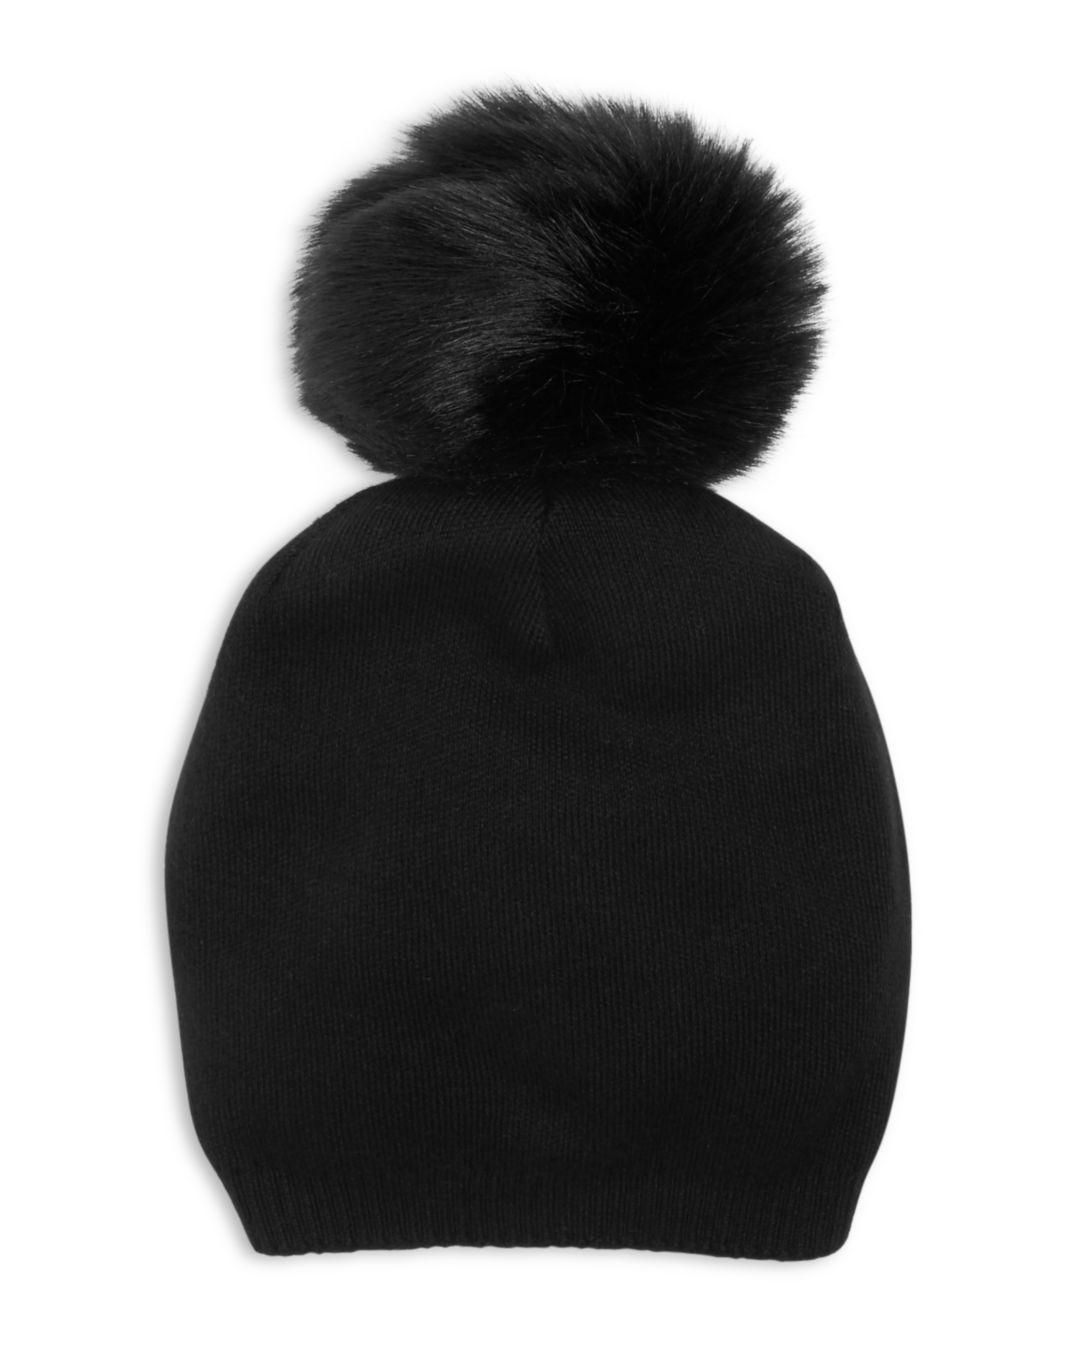 Kyi Kyi Cashmere Faux Fur Pom Pom Hat in Black - Lyst